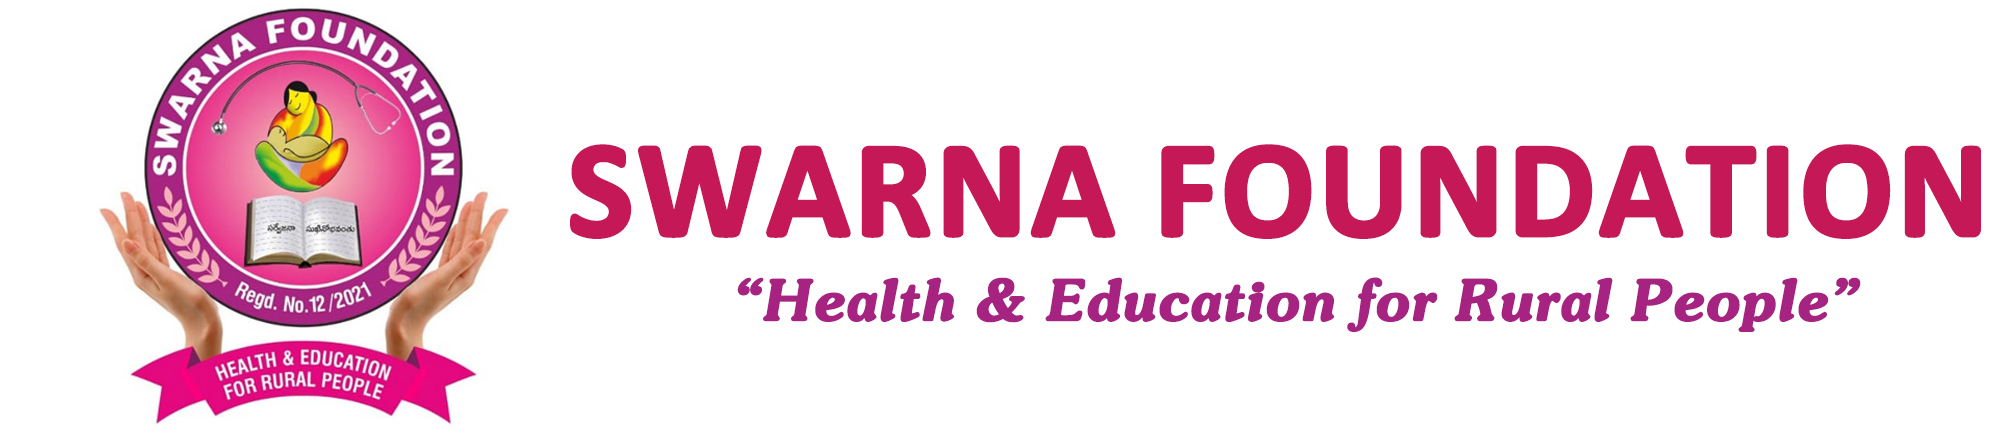 Swarna Foundation